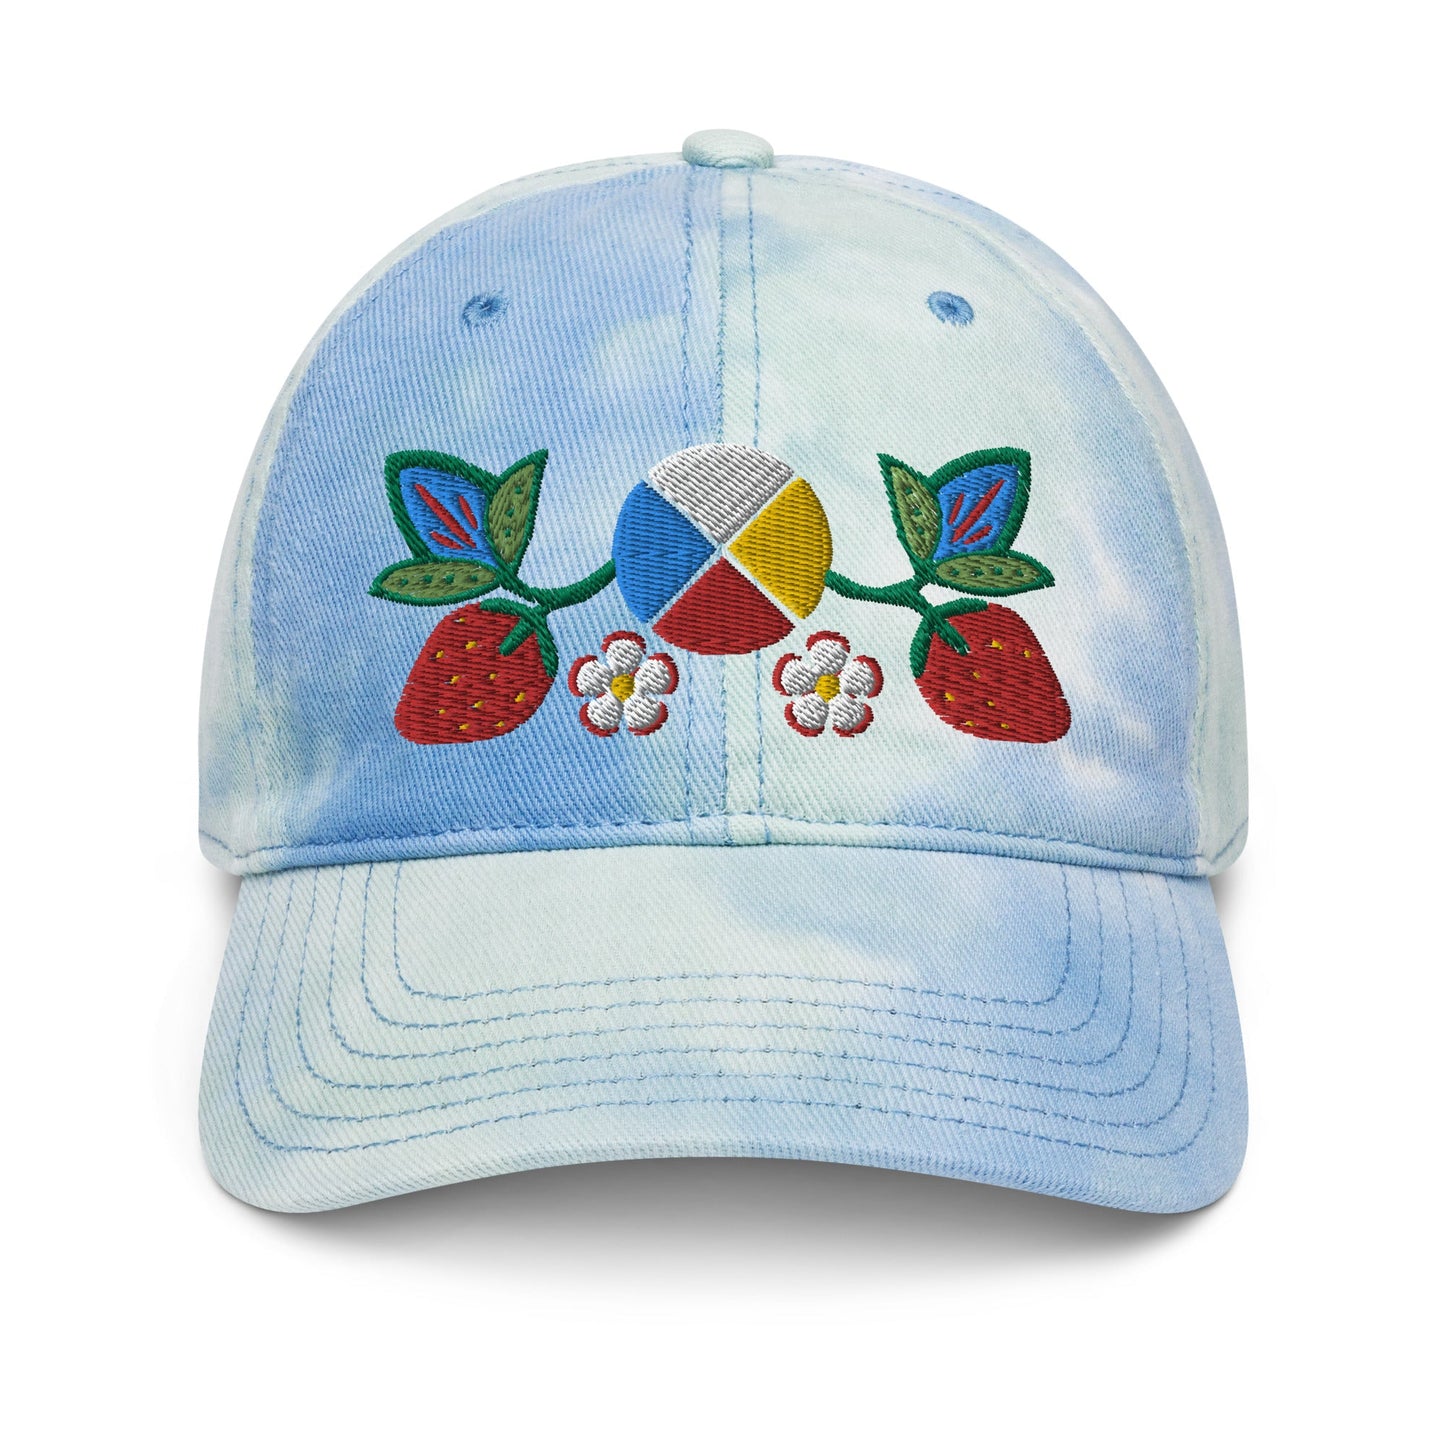 Native Floral Tie dye hat - Nikikw Designs